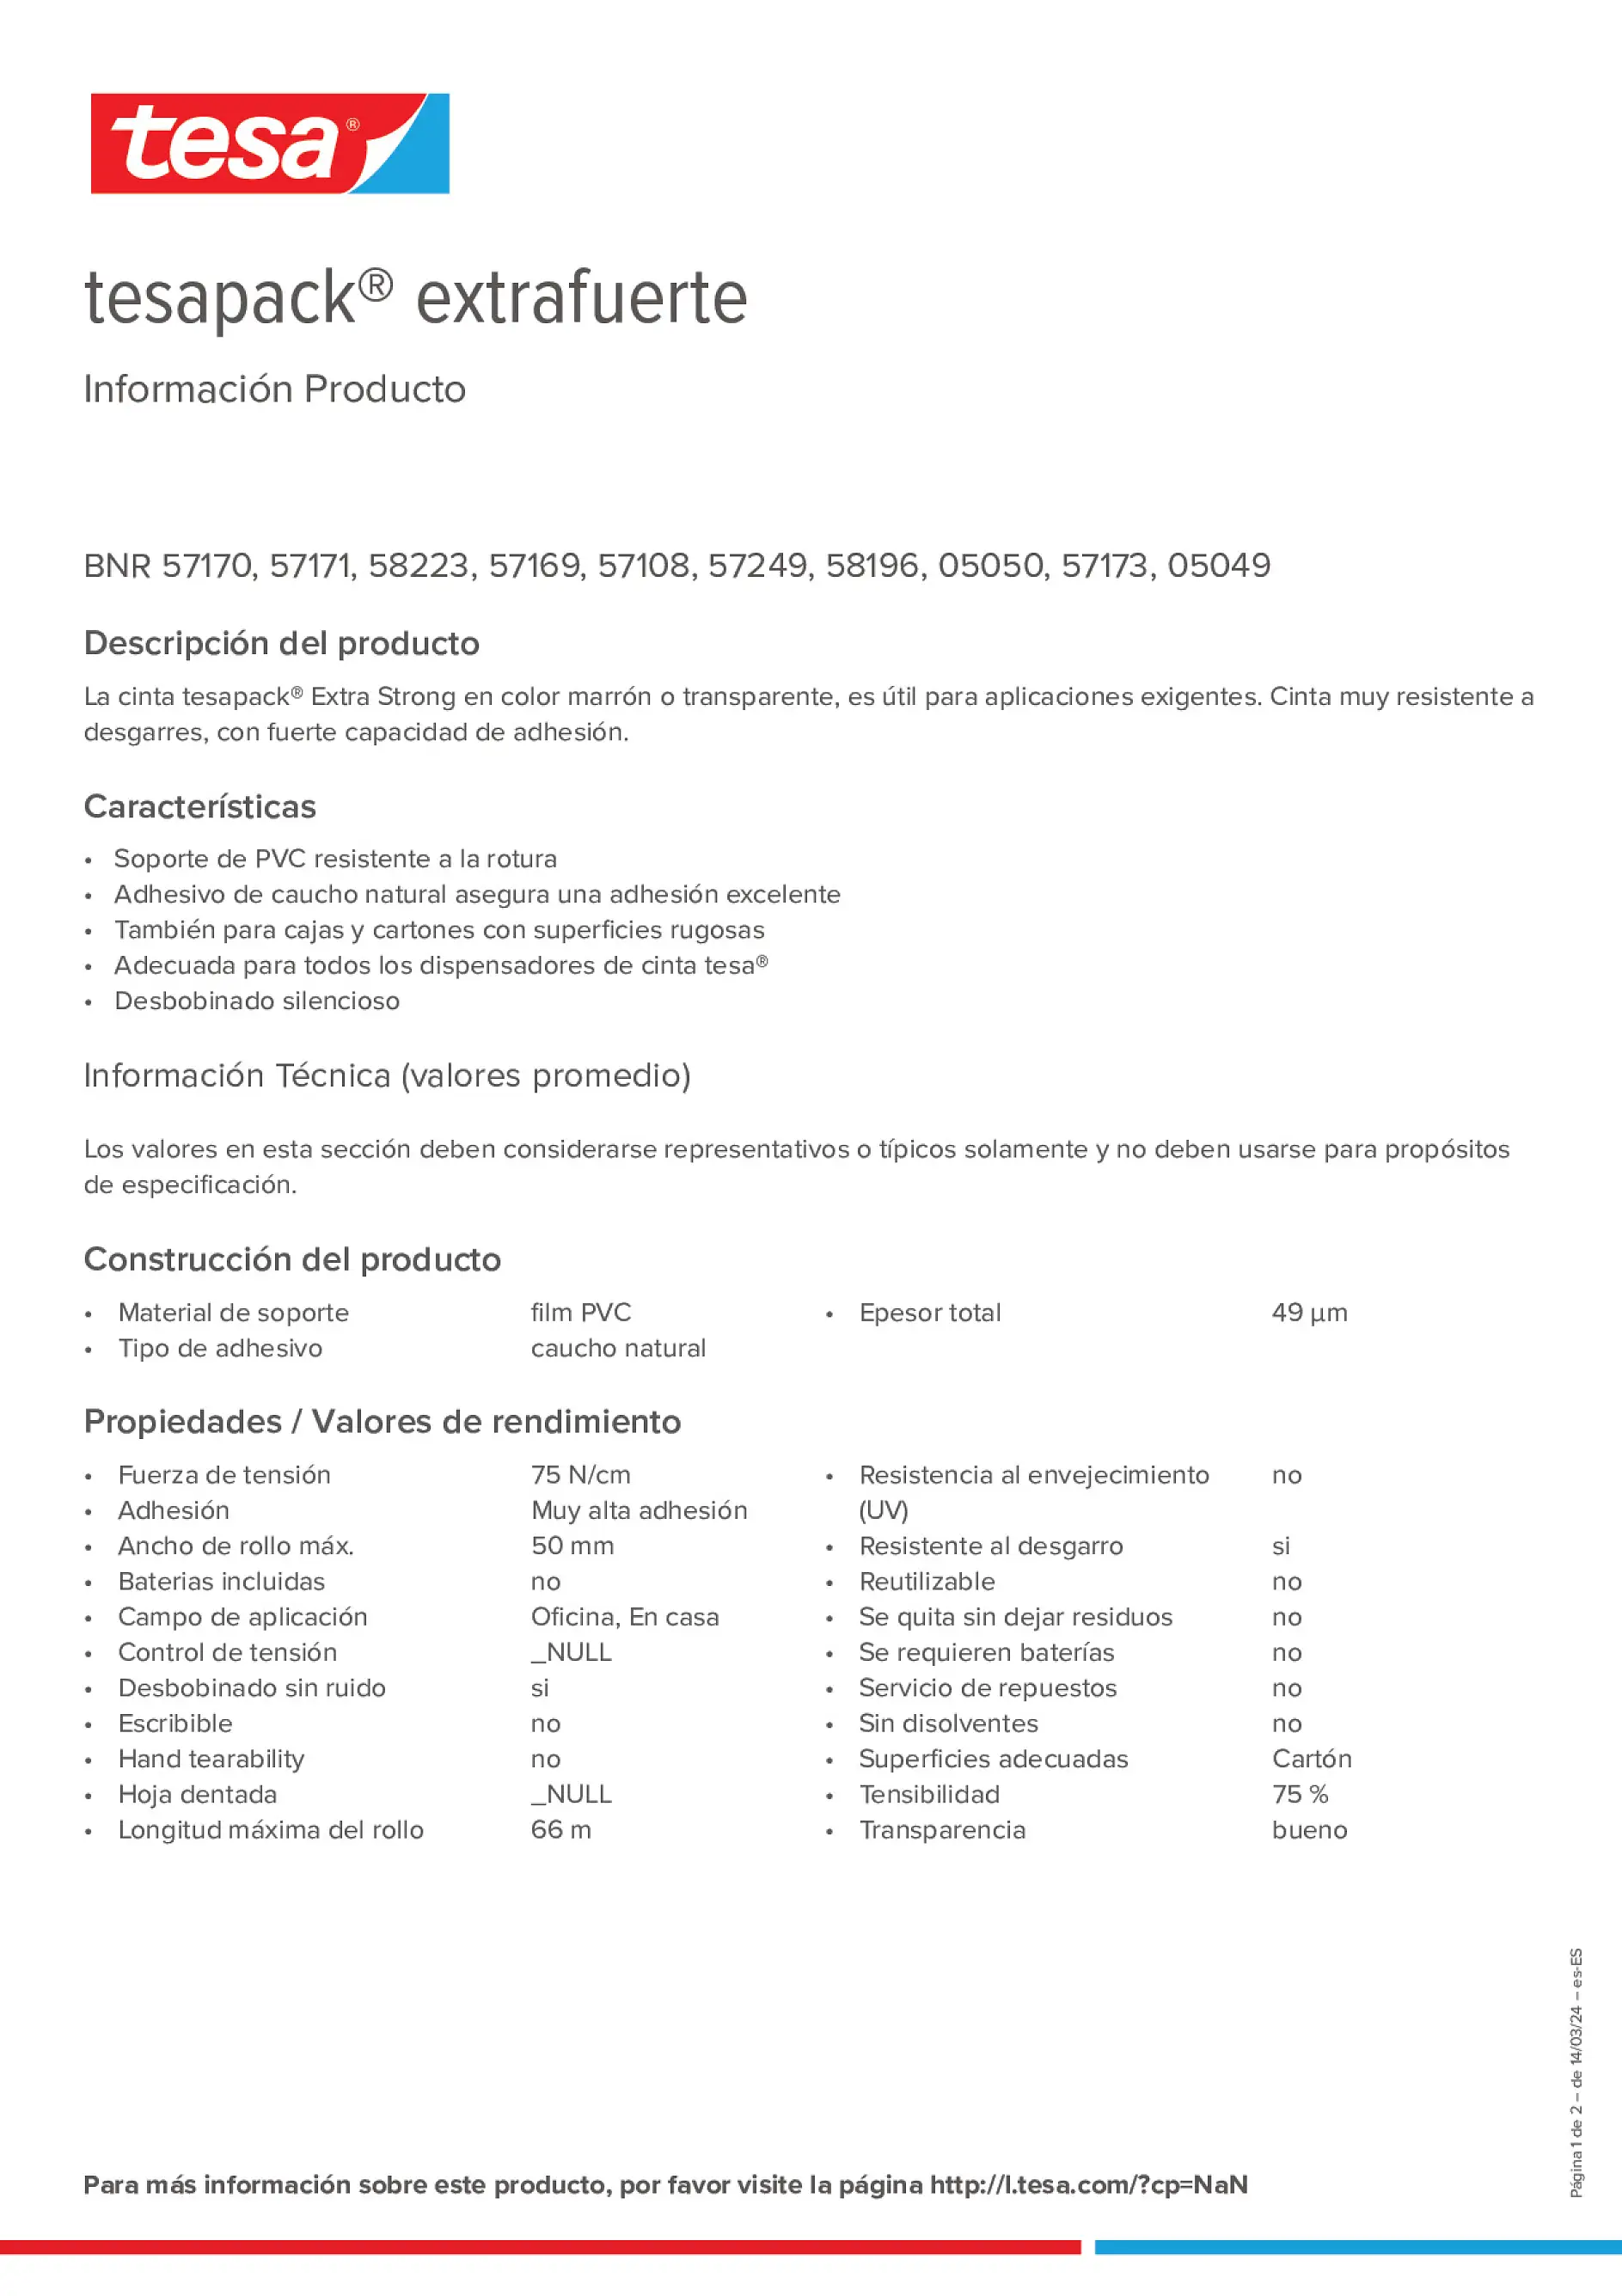 Product information_tesapack® 57249_es-ES